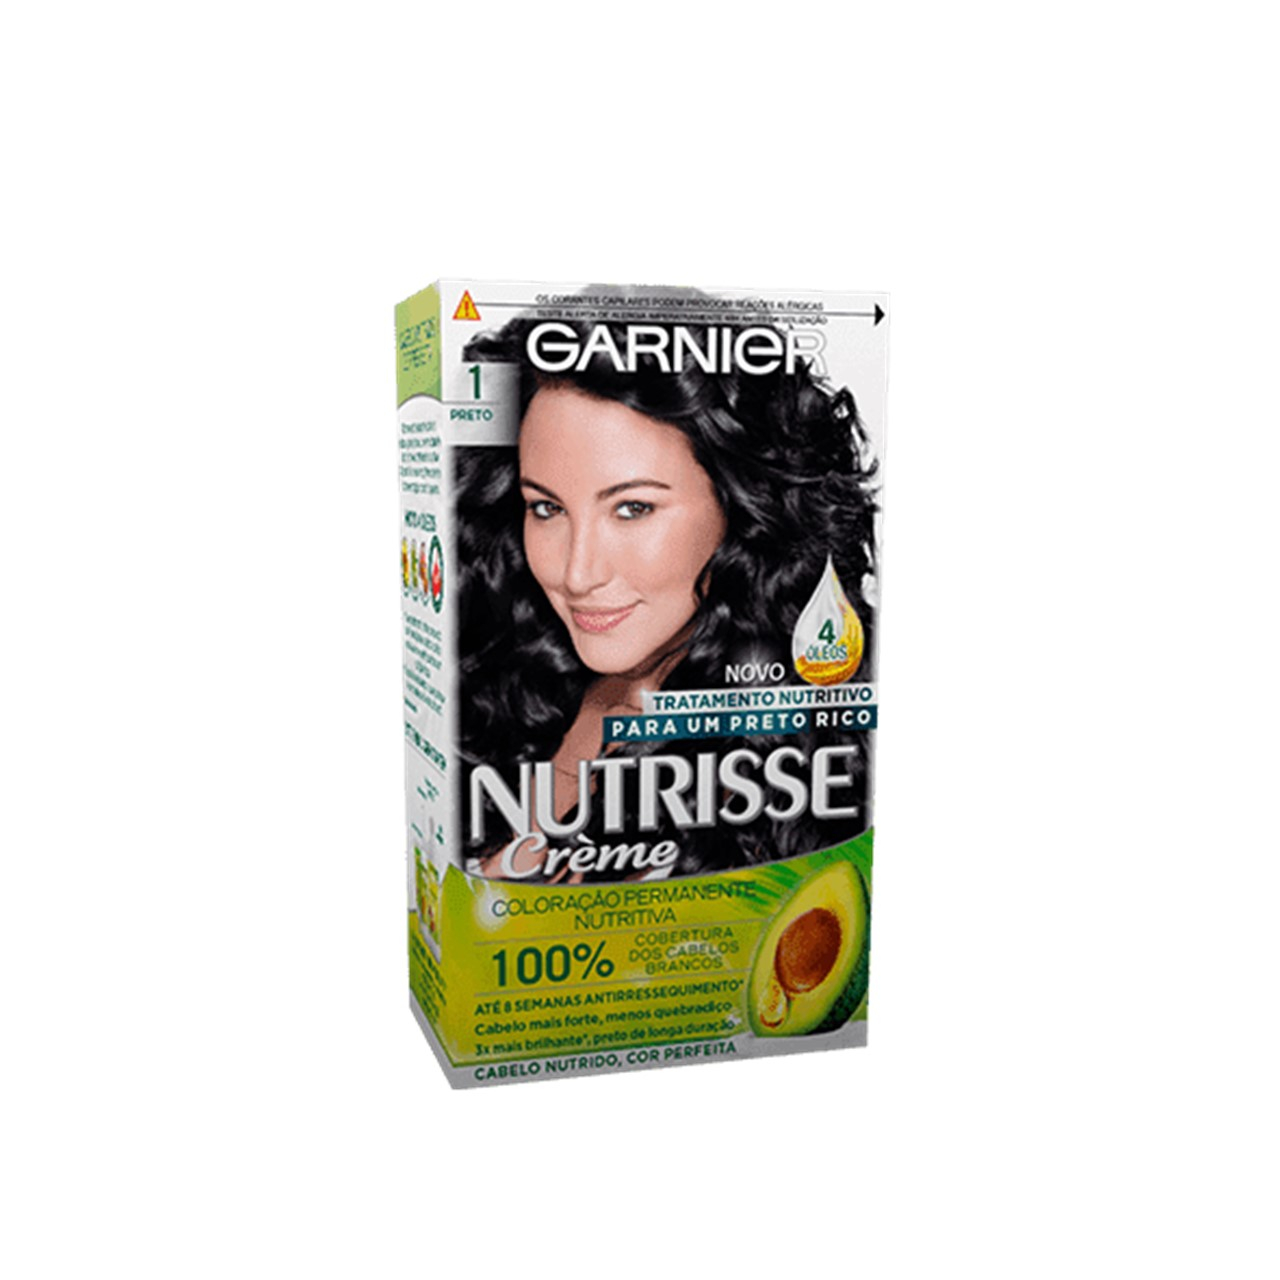 Garnier Nutrisse Crème 1 Black Permanent Hair Dye